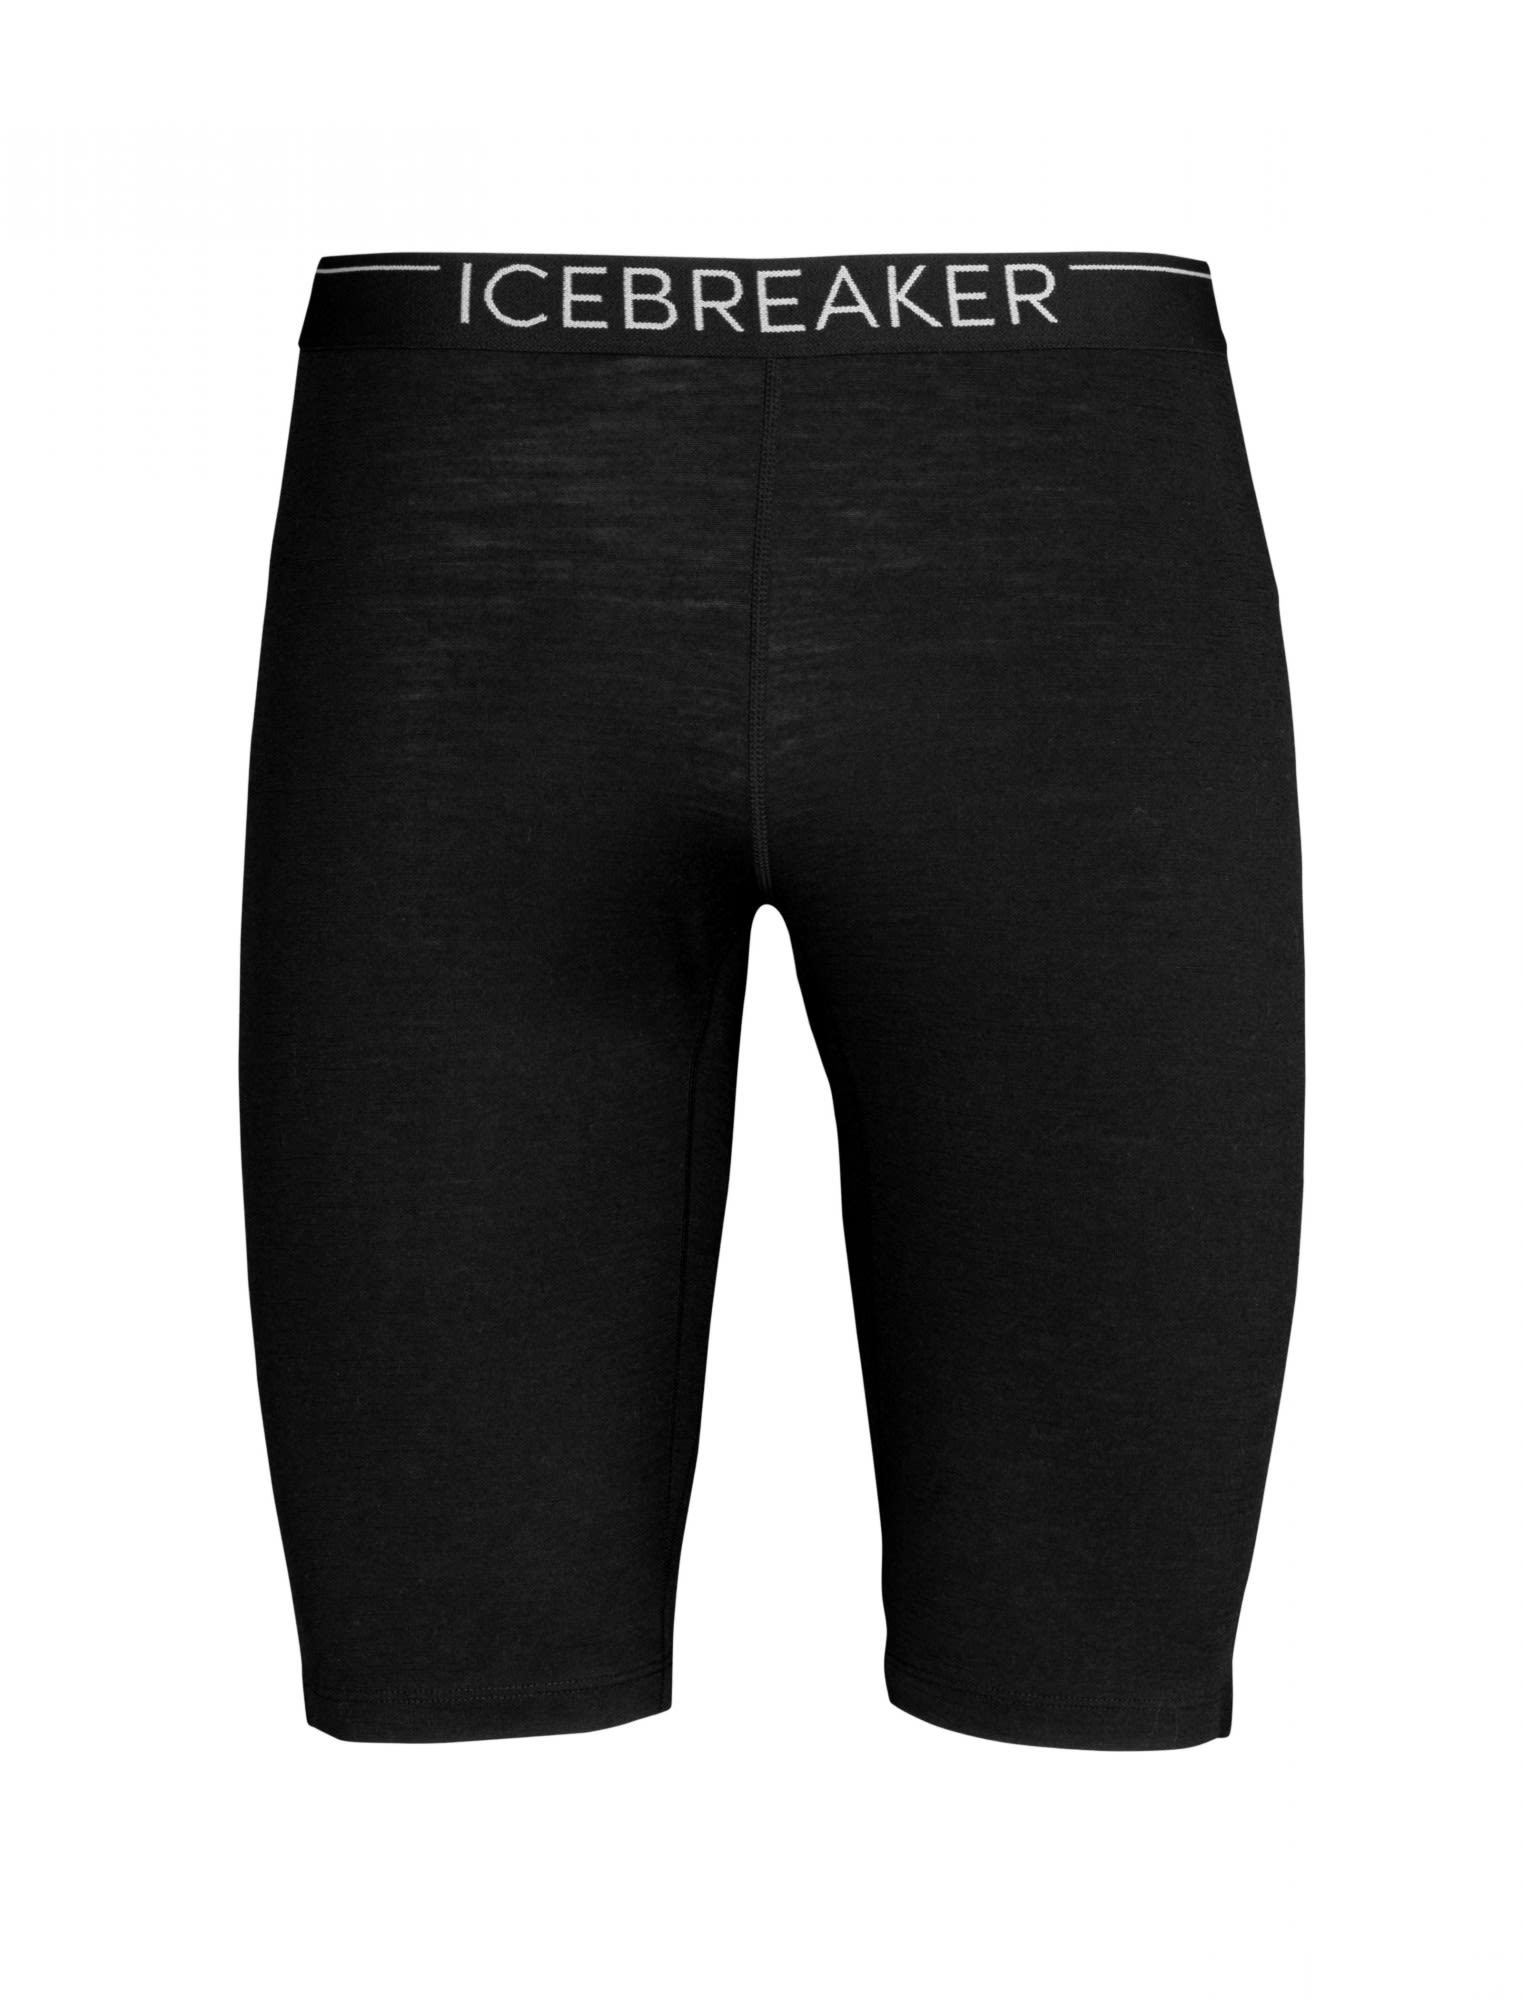 Icebreaker 200 Oasis Shorts